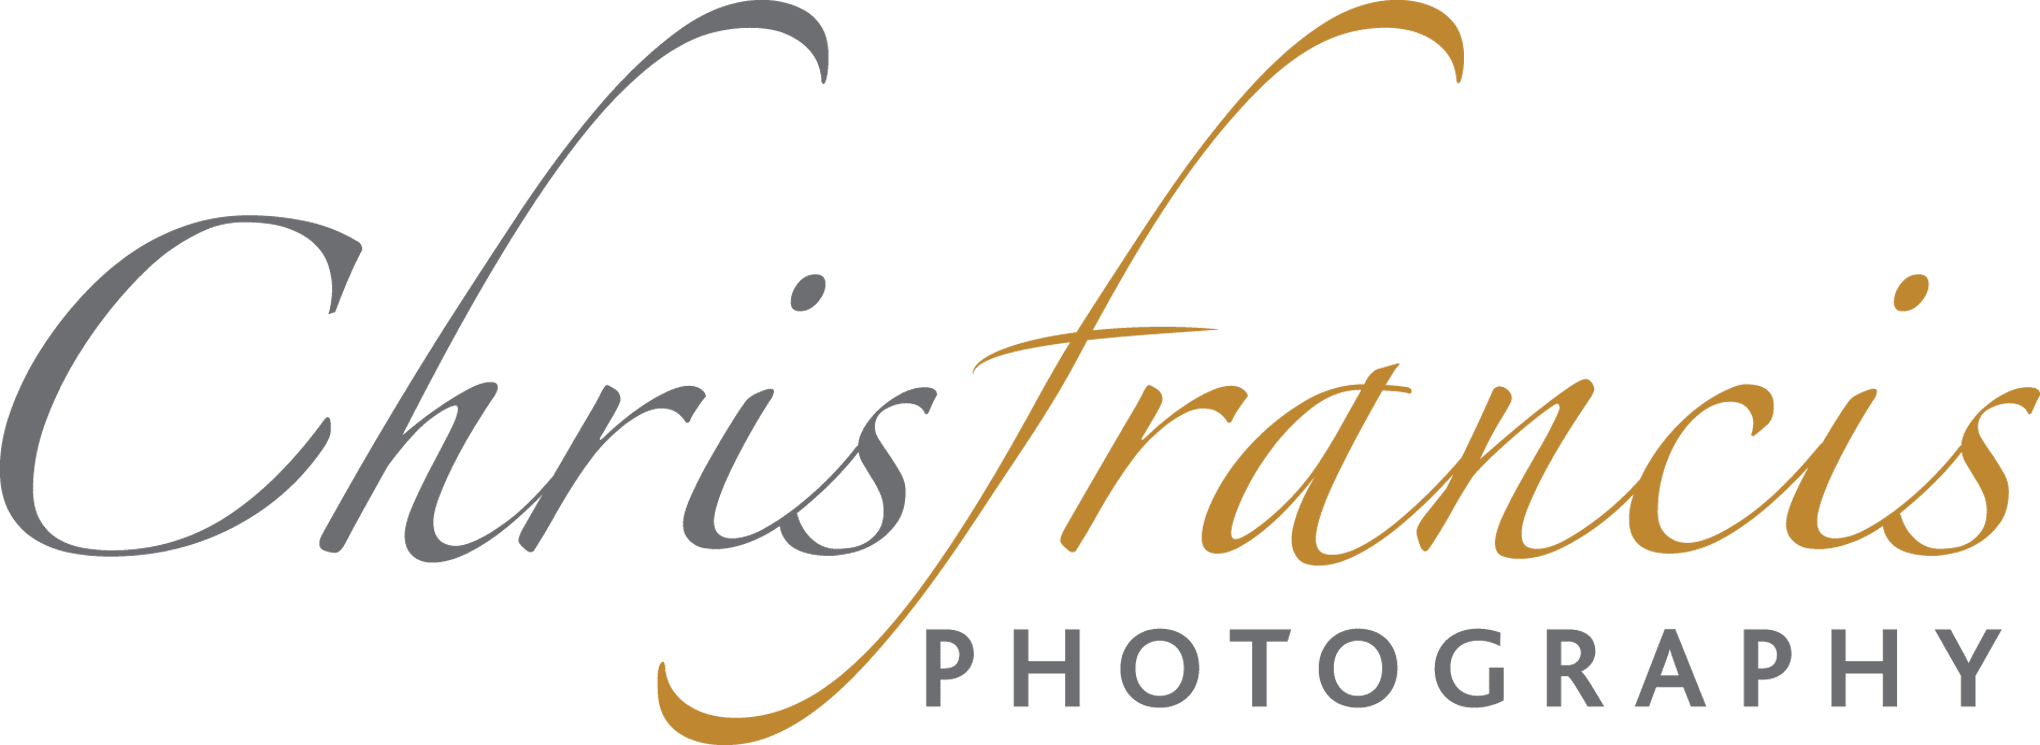 Chris Francis photography logo